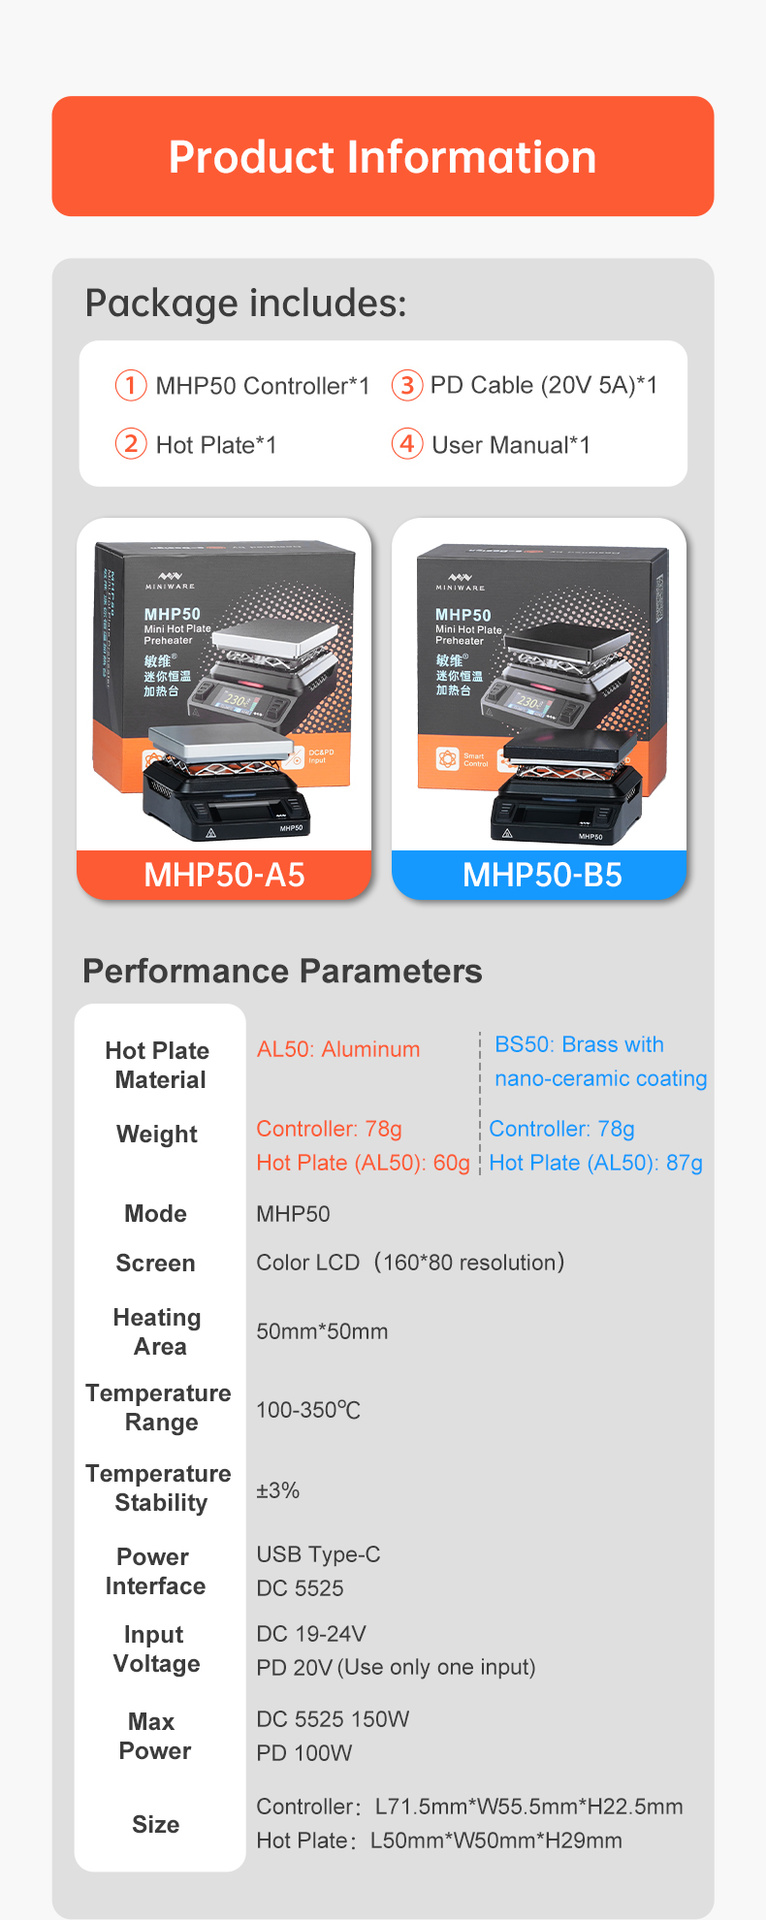 MHP50 Mini Hot Plate Preheater